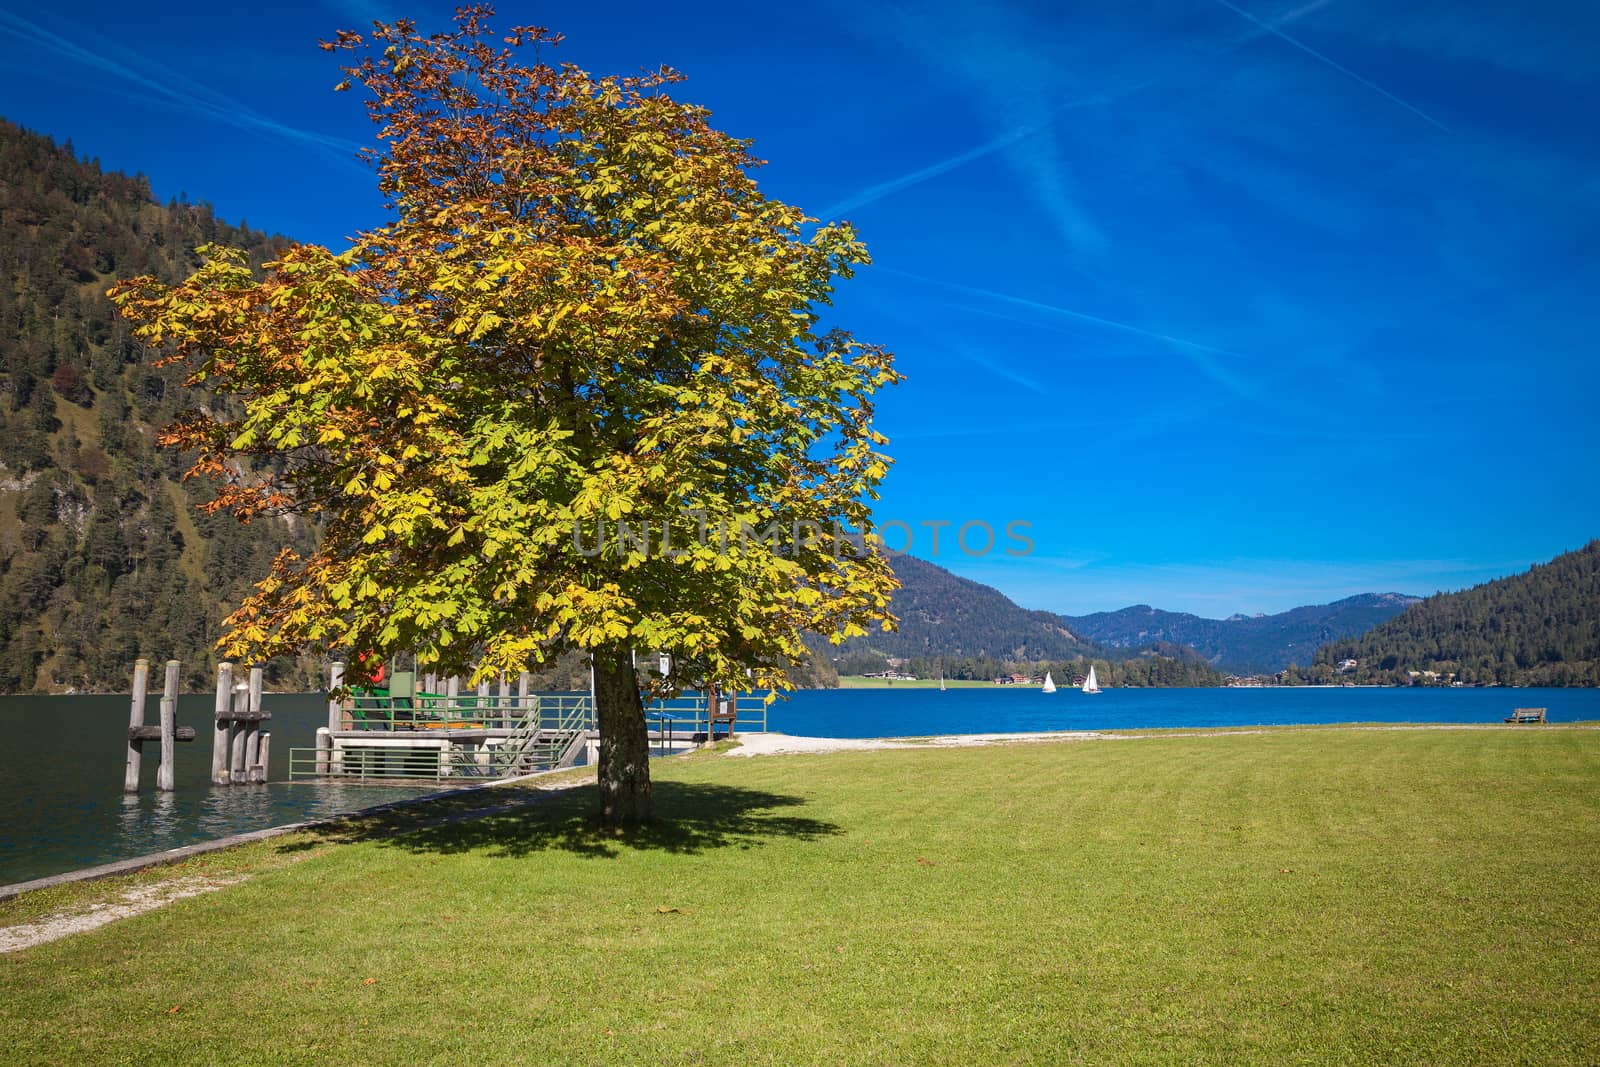 Autumn at the lake Achensee in Austria